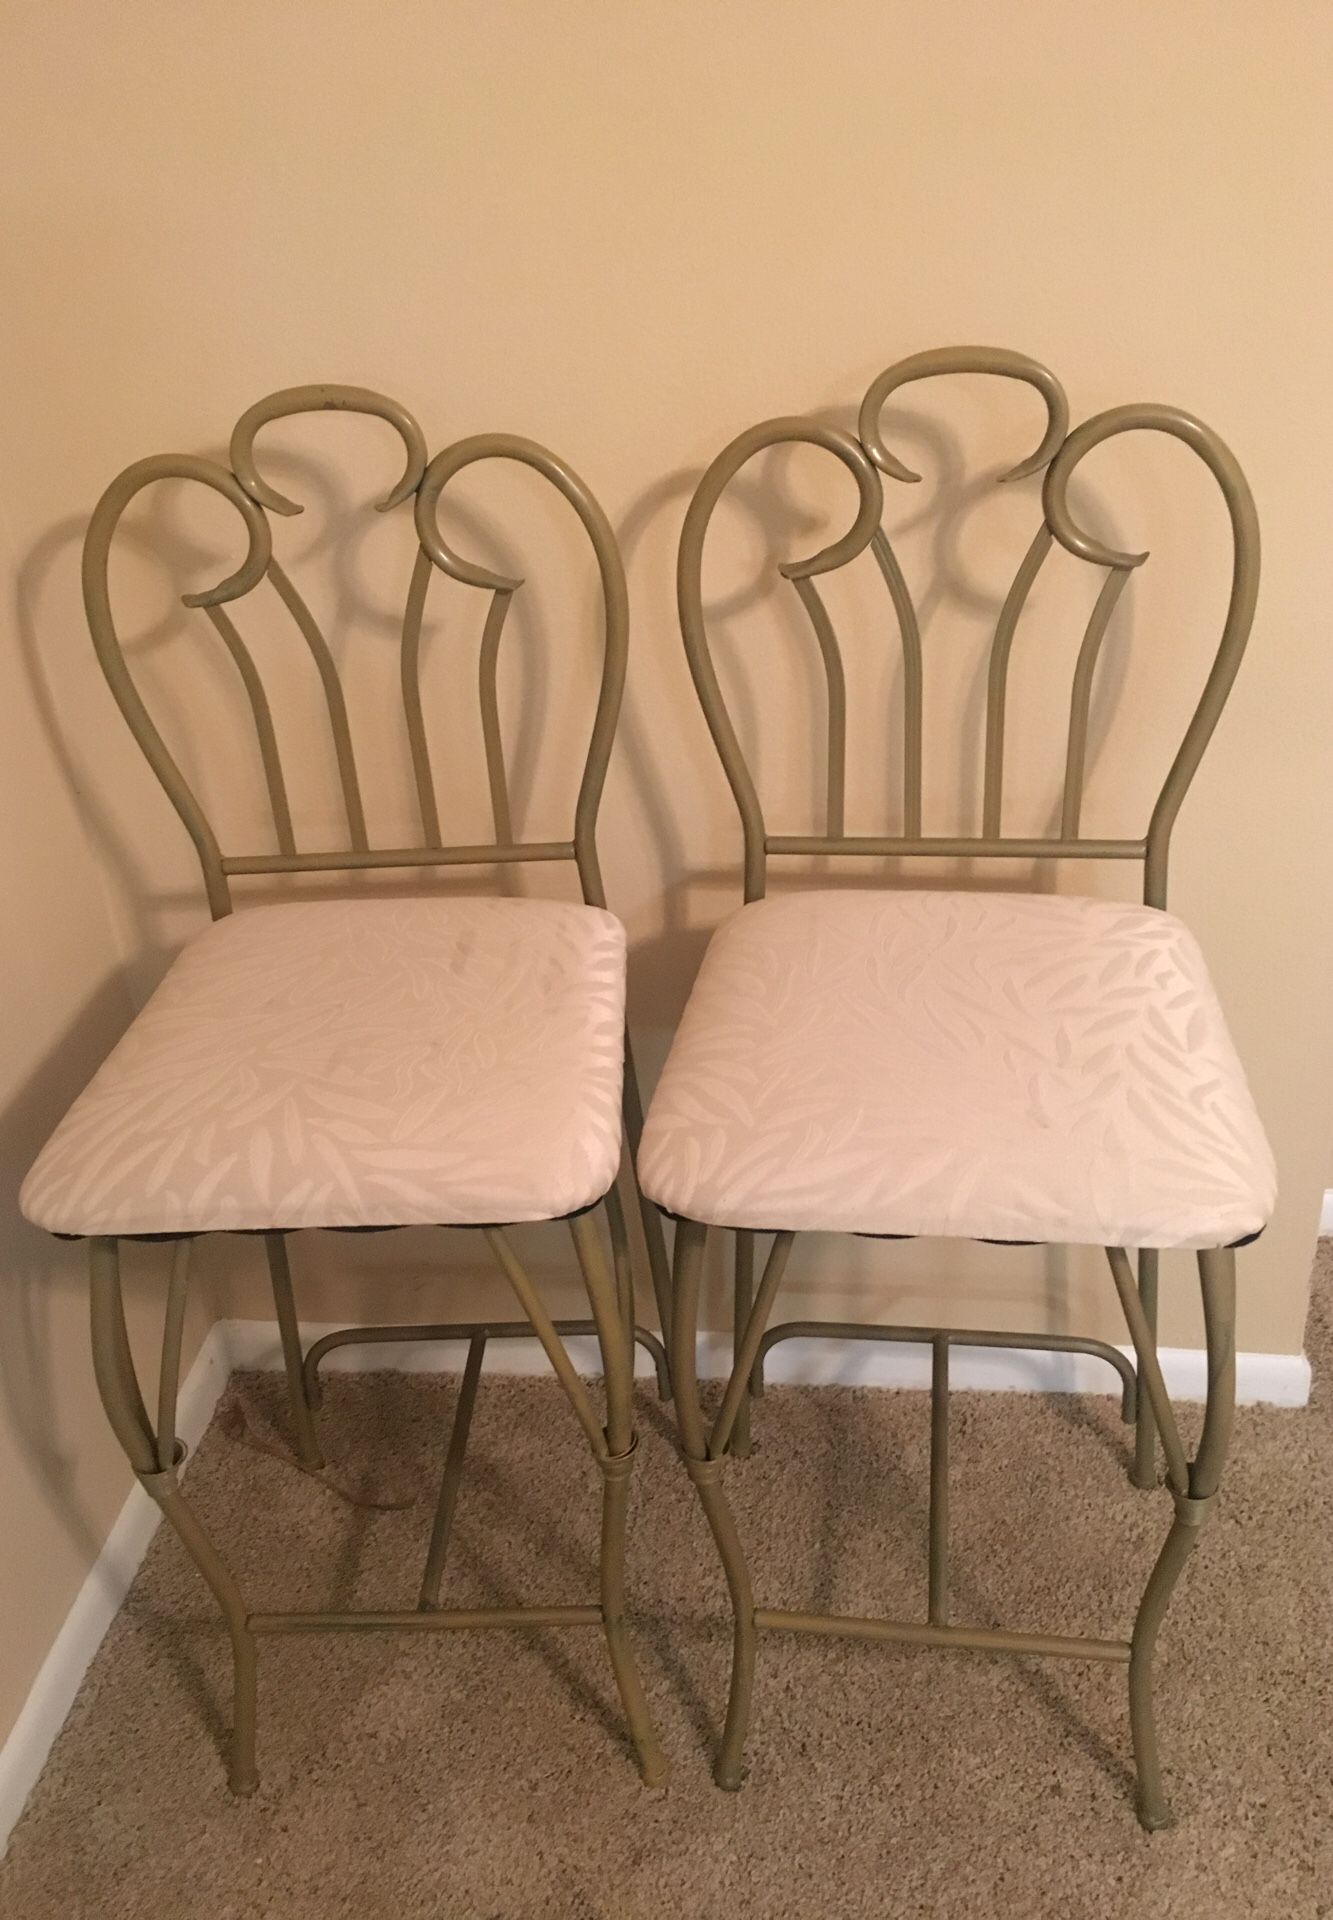 Breakfast bar chairs/high table